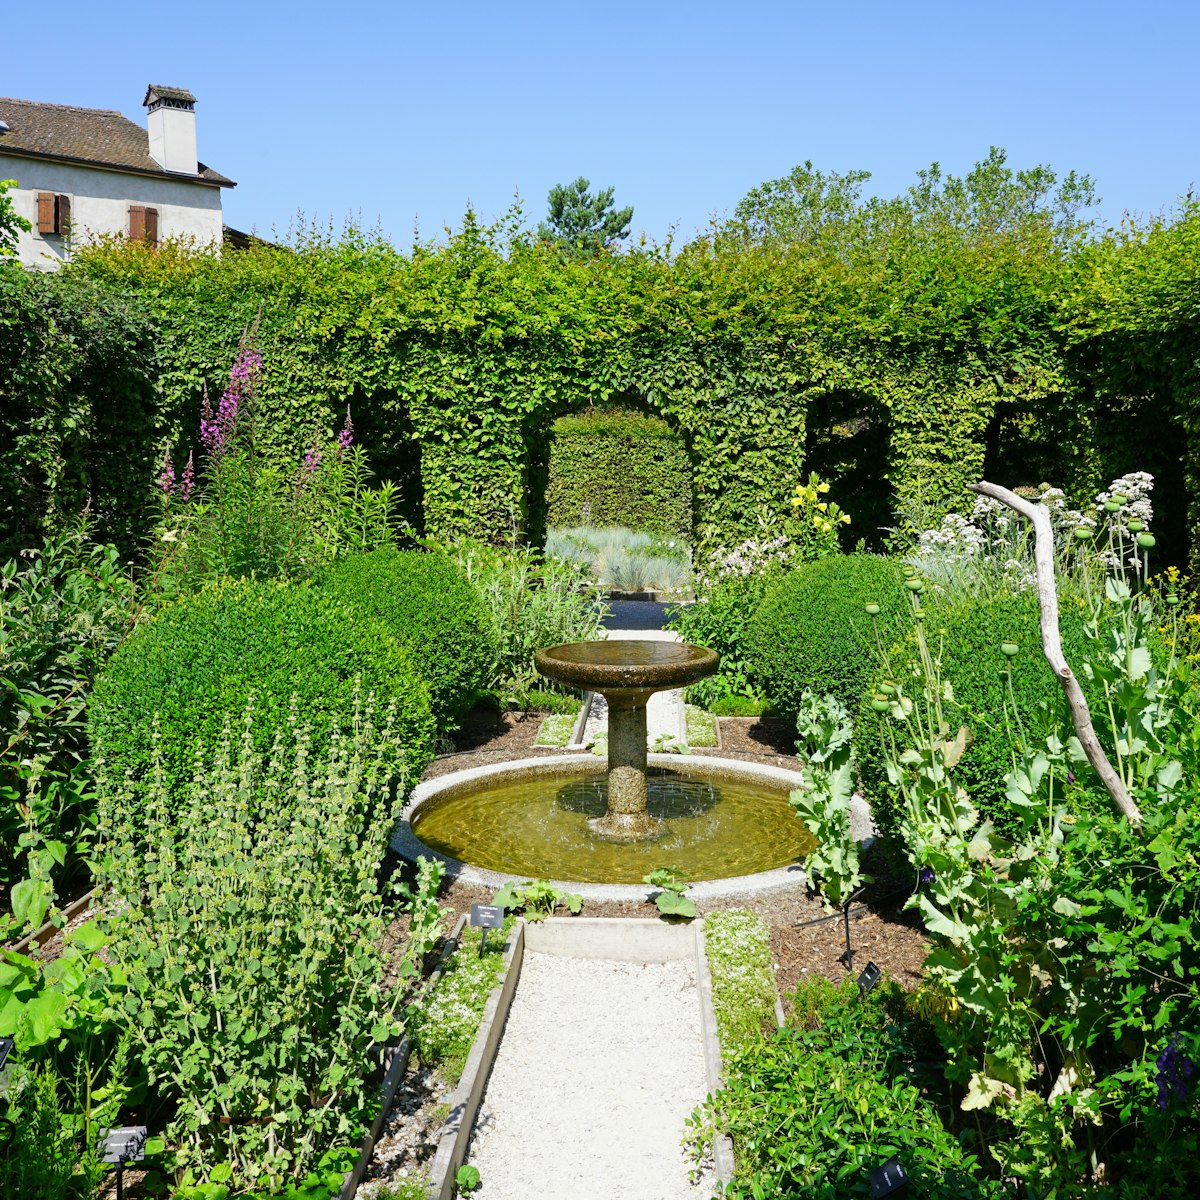 The Jardin des Cinq Sens (Five senses garden) in the medieval village of Yvoire, France.